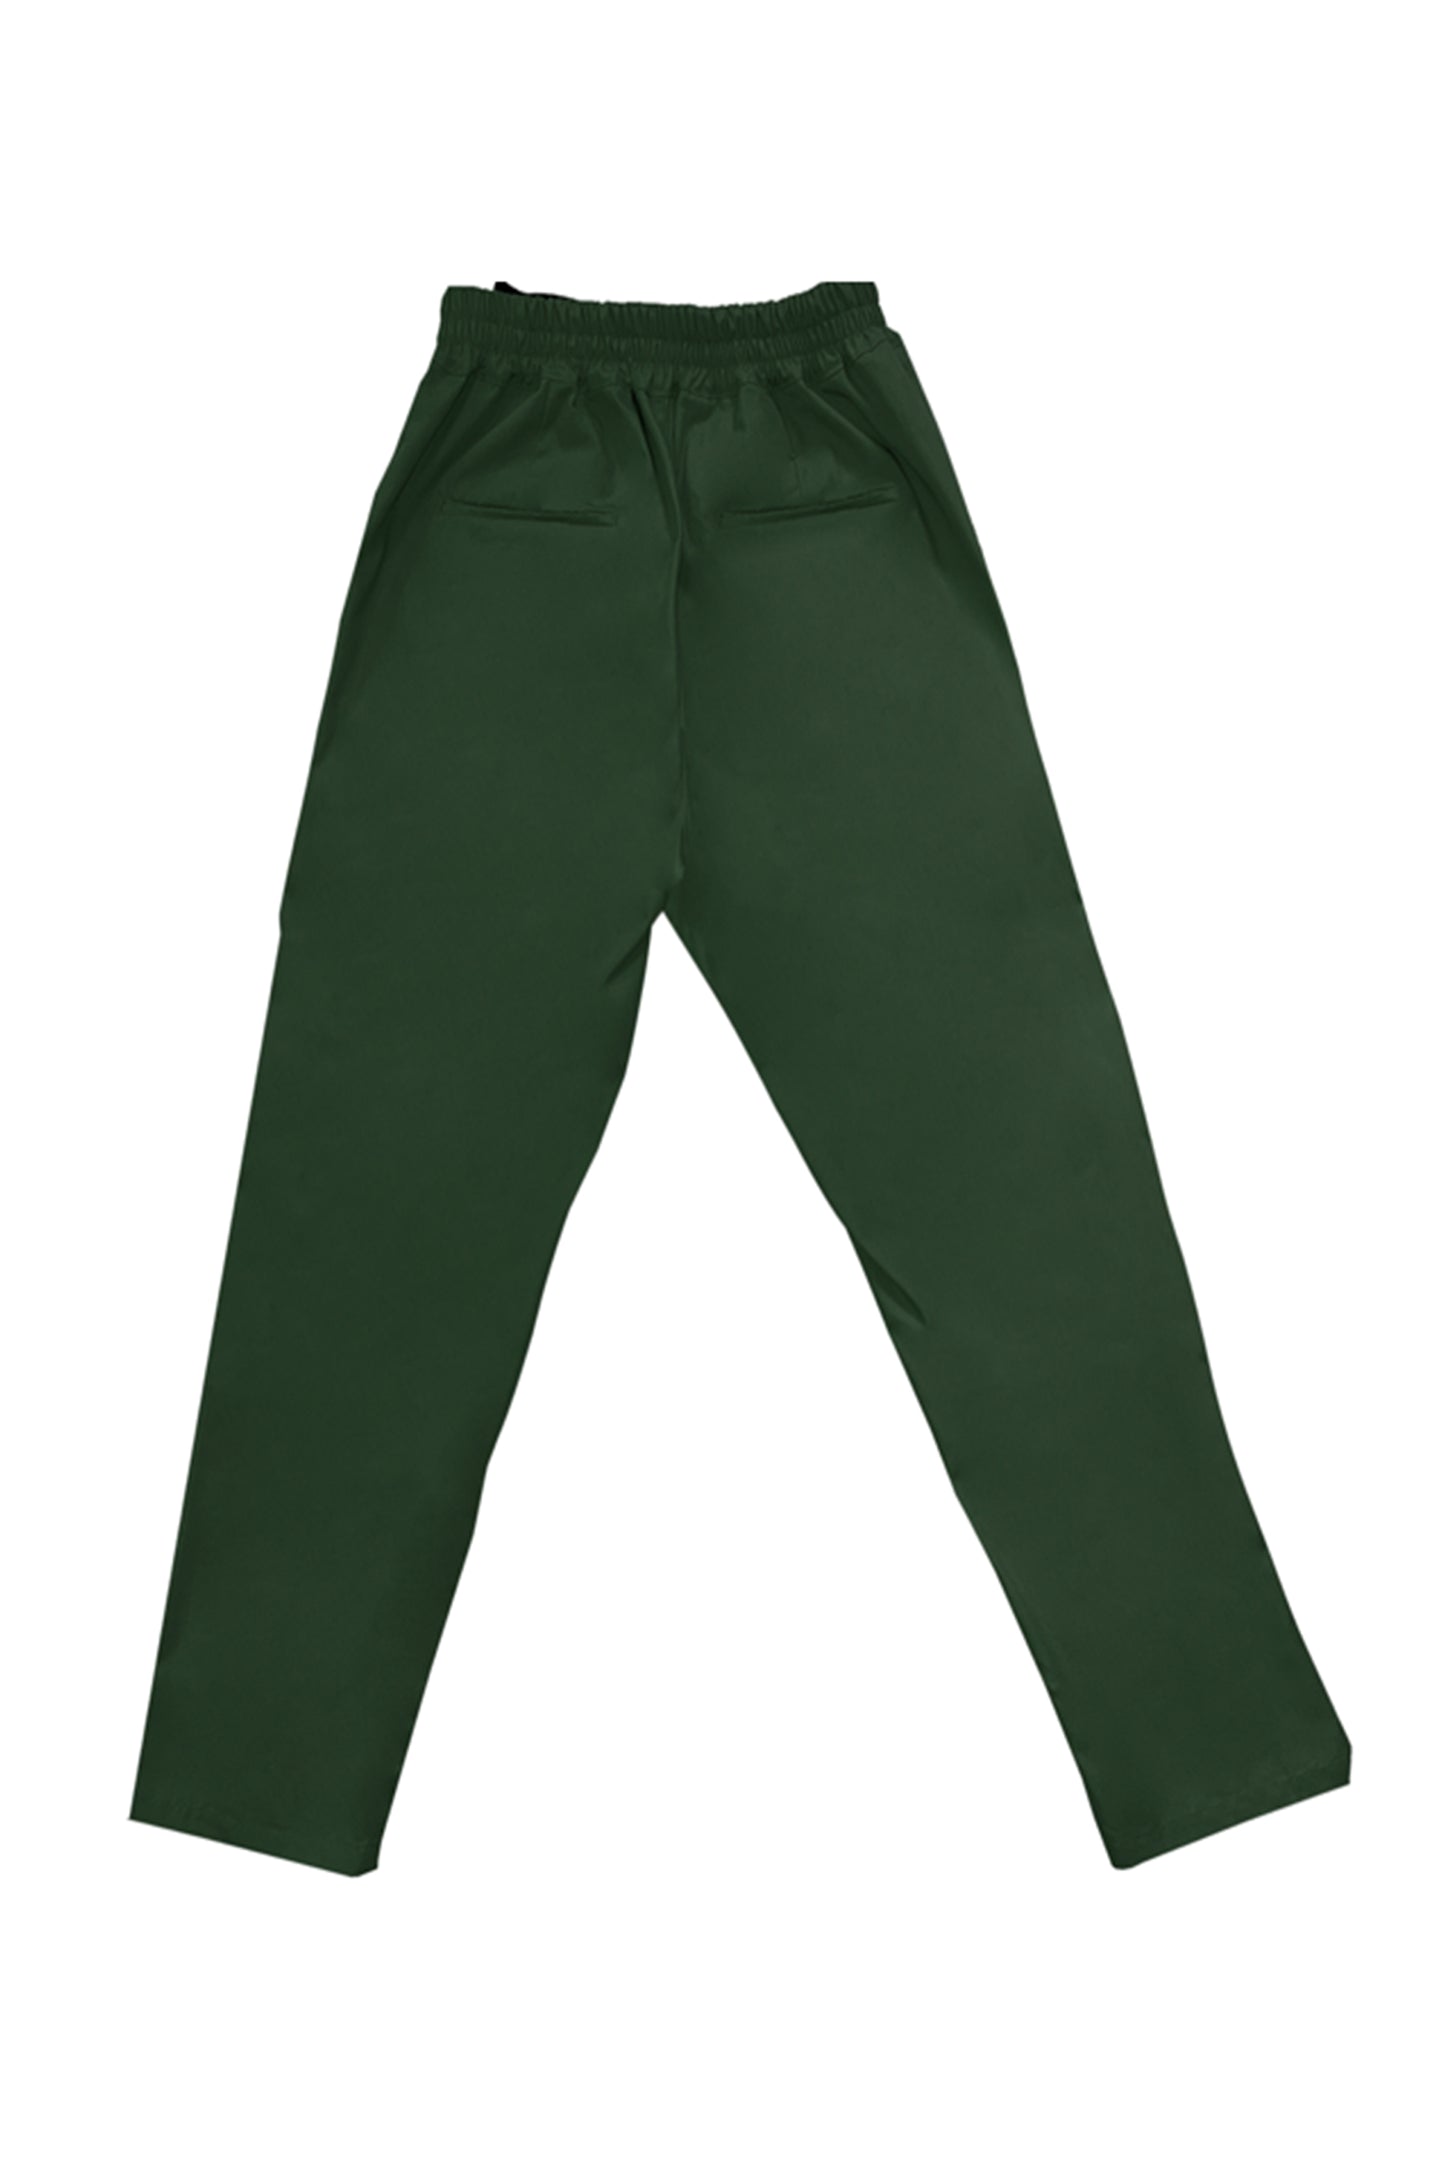 Hunter Green Pants